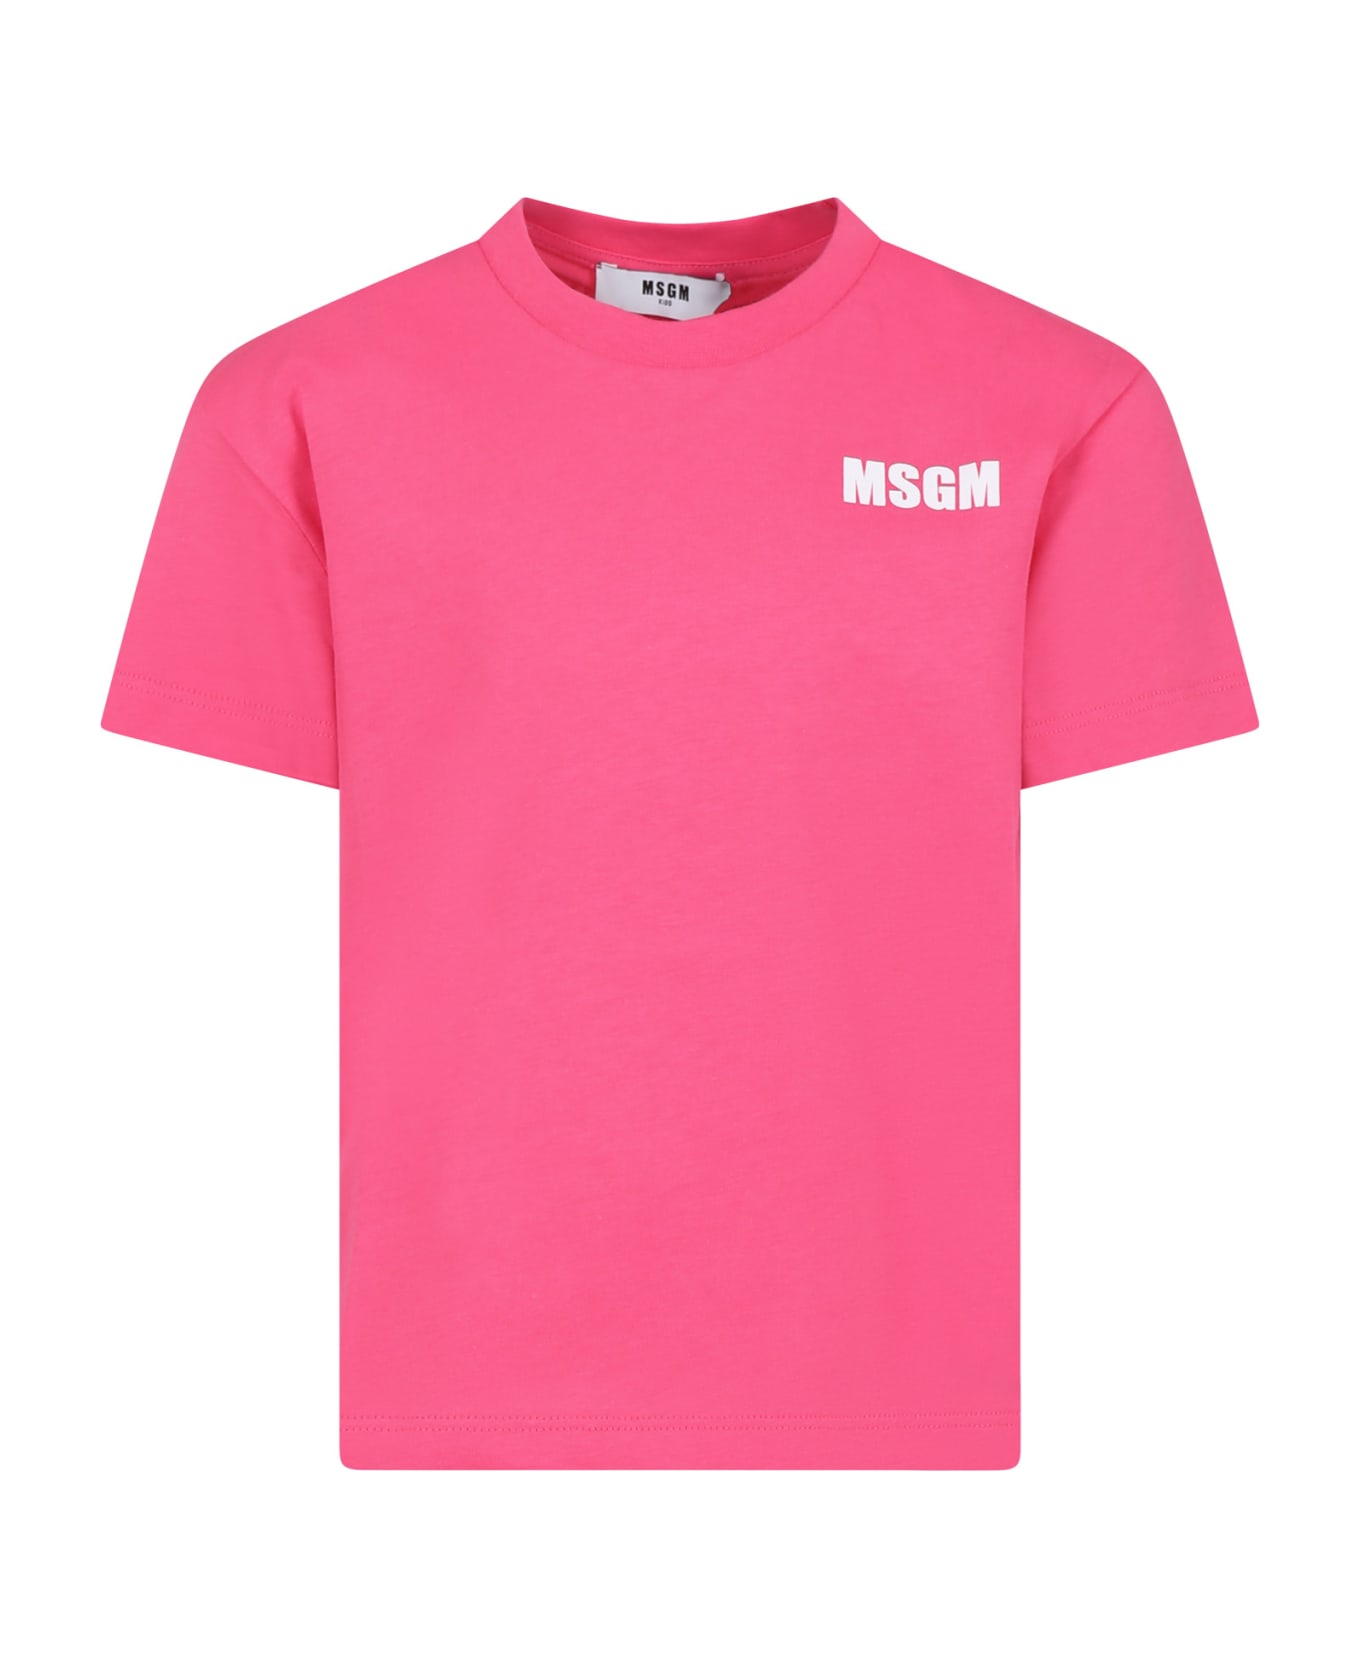 MSGM Fuchsia T-shirt For Kids With Logo - Fuchsia